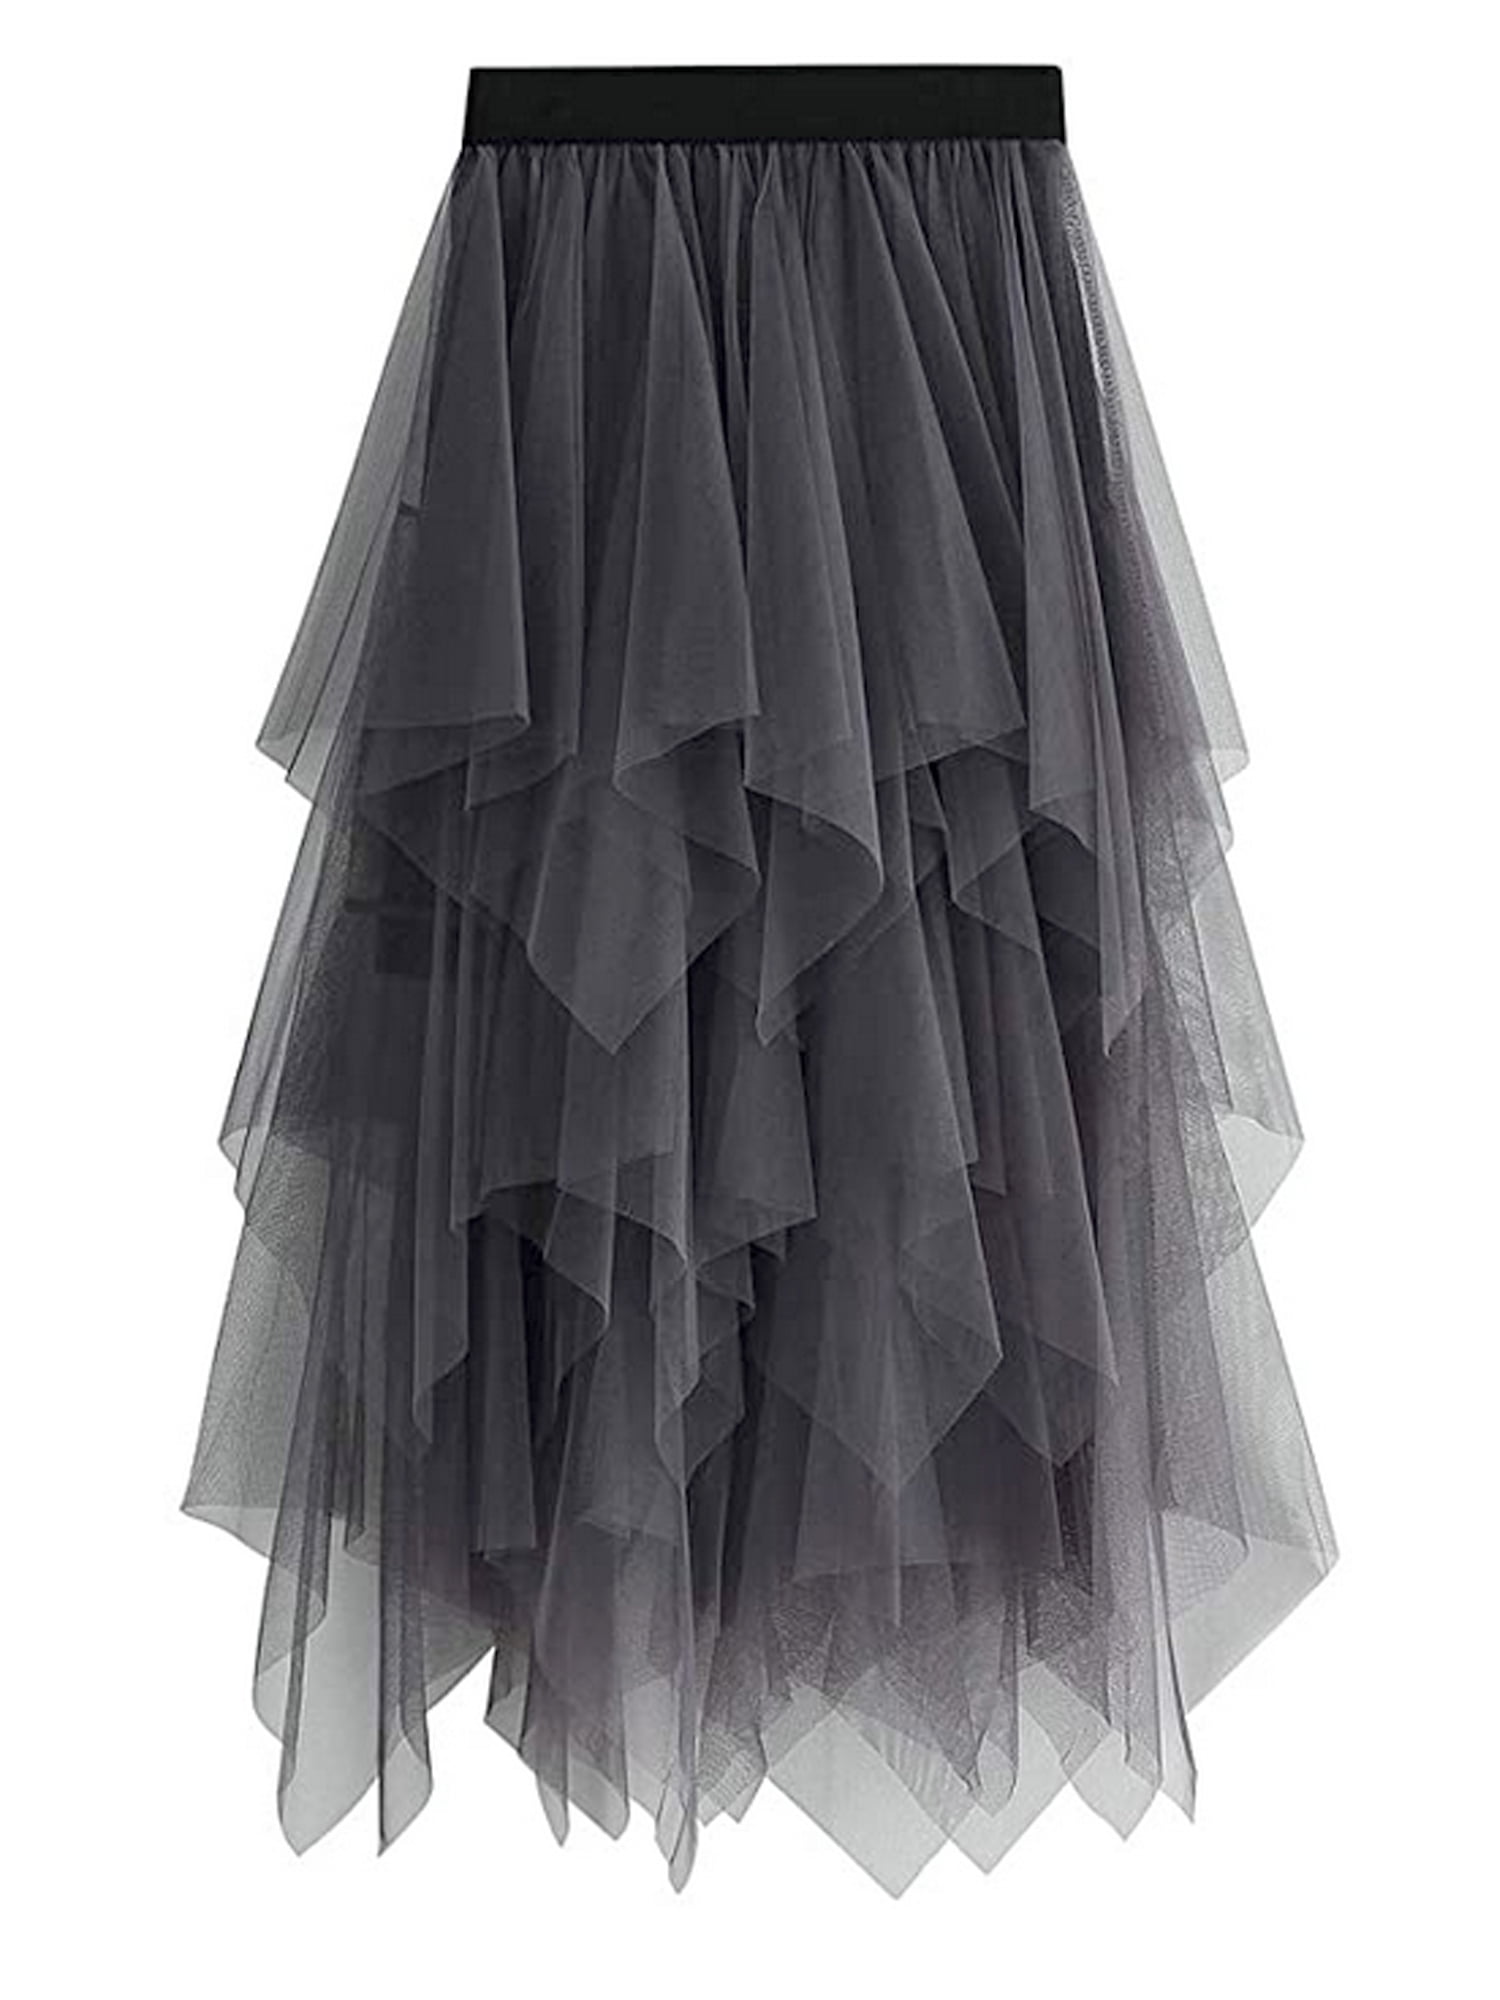 Women 's Elastic High Waist Tutu Tulle Skirt A Line Long Layered Prom Wedding Party Midi Skirts 